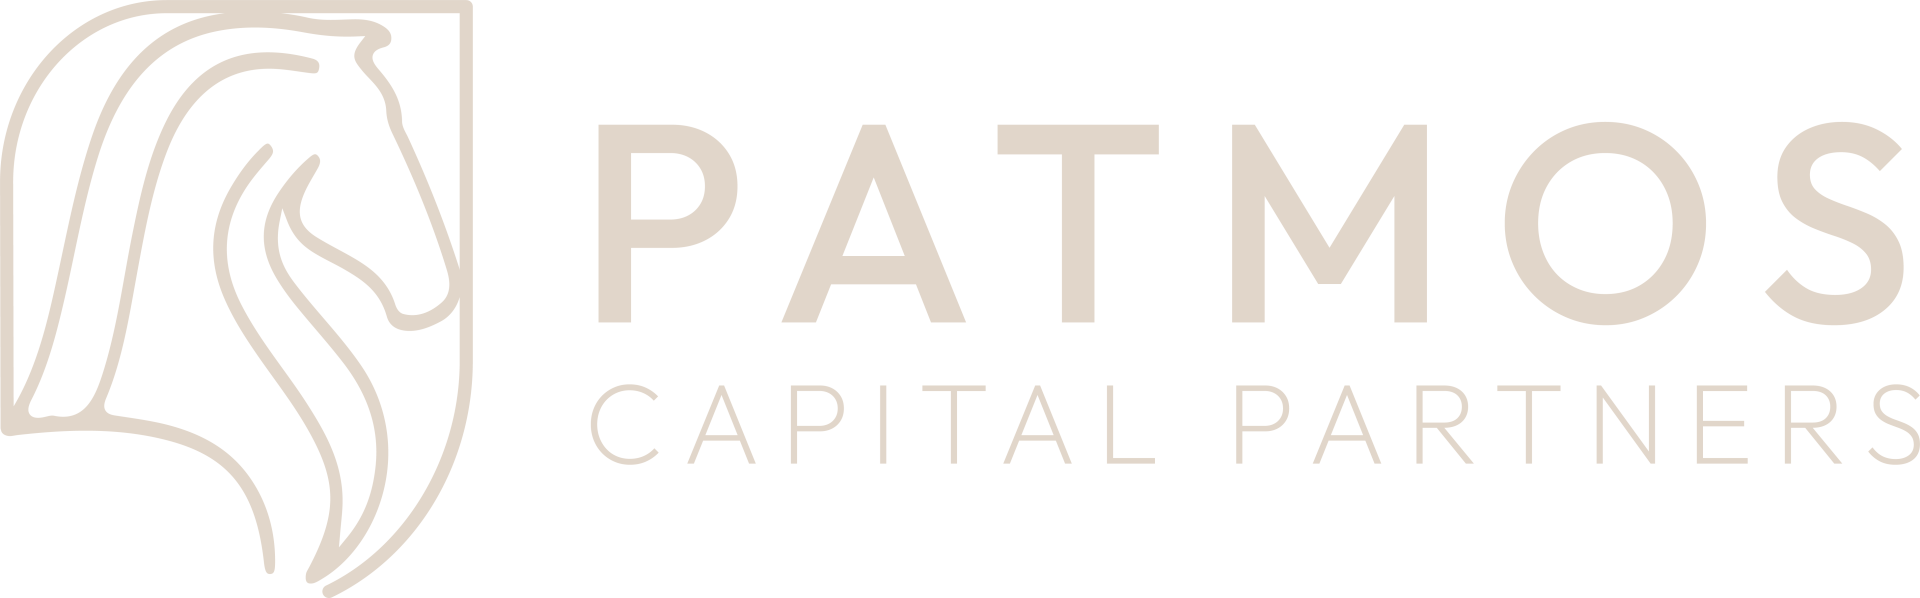 Patmos Capital Partners Logo